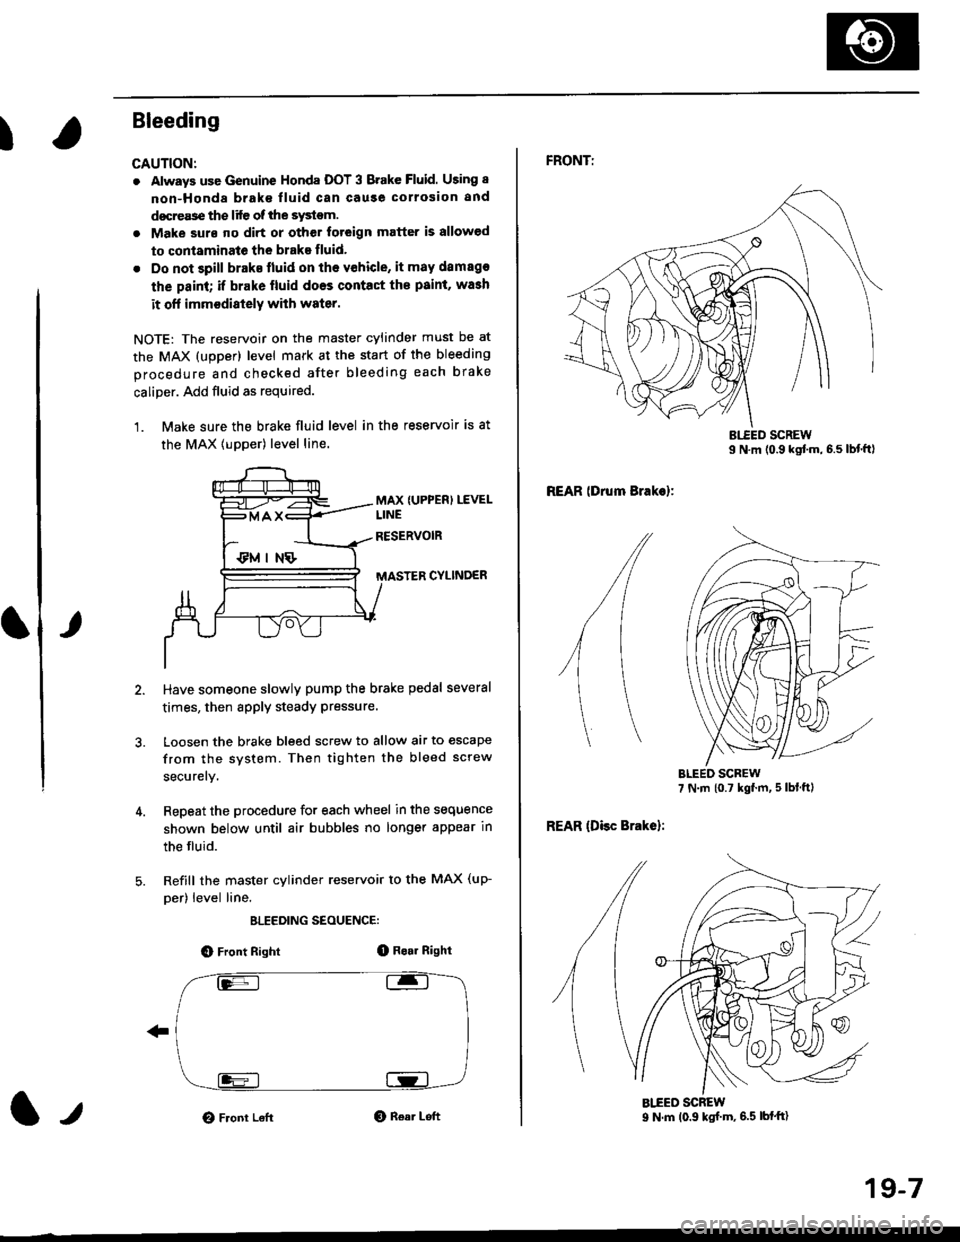 HONDA CIVIC 1997 6.G Workshop Manual I
Bleeding
CAUTION:
. Always use Genuine Honda DOT 3 Brake Fluid. Using 8
non-Honda brak€ fluid can cause corrosion and
docrea3e the life of the system.
. Make surs ||o dirt or other foteign matter 